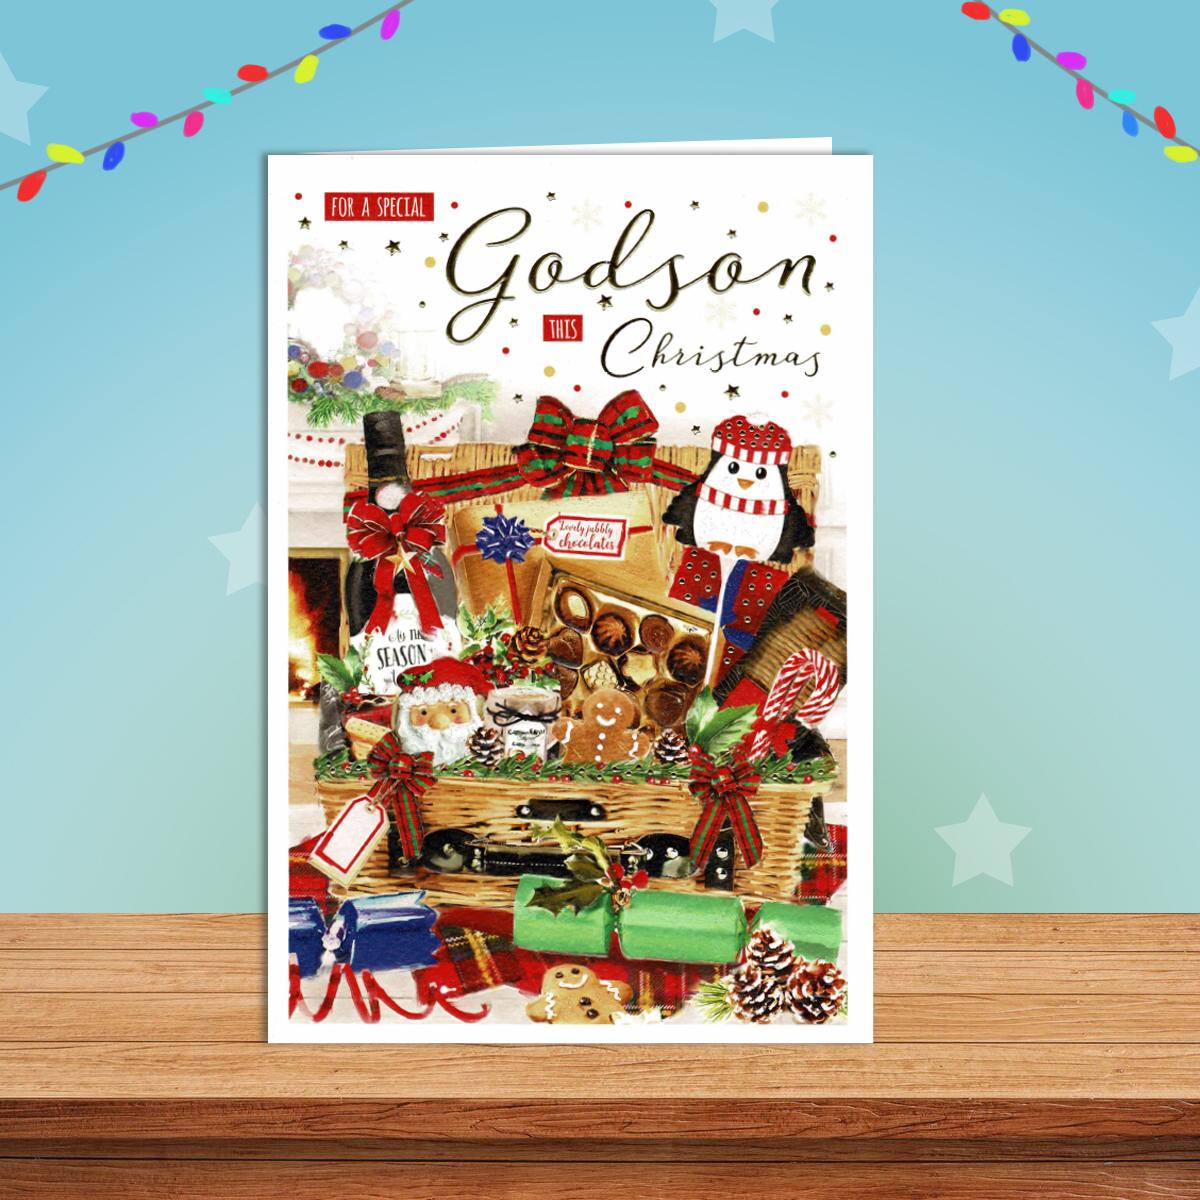 Godson Christmas Card Alongside Its Red Envelope